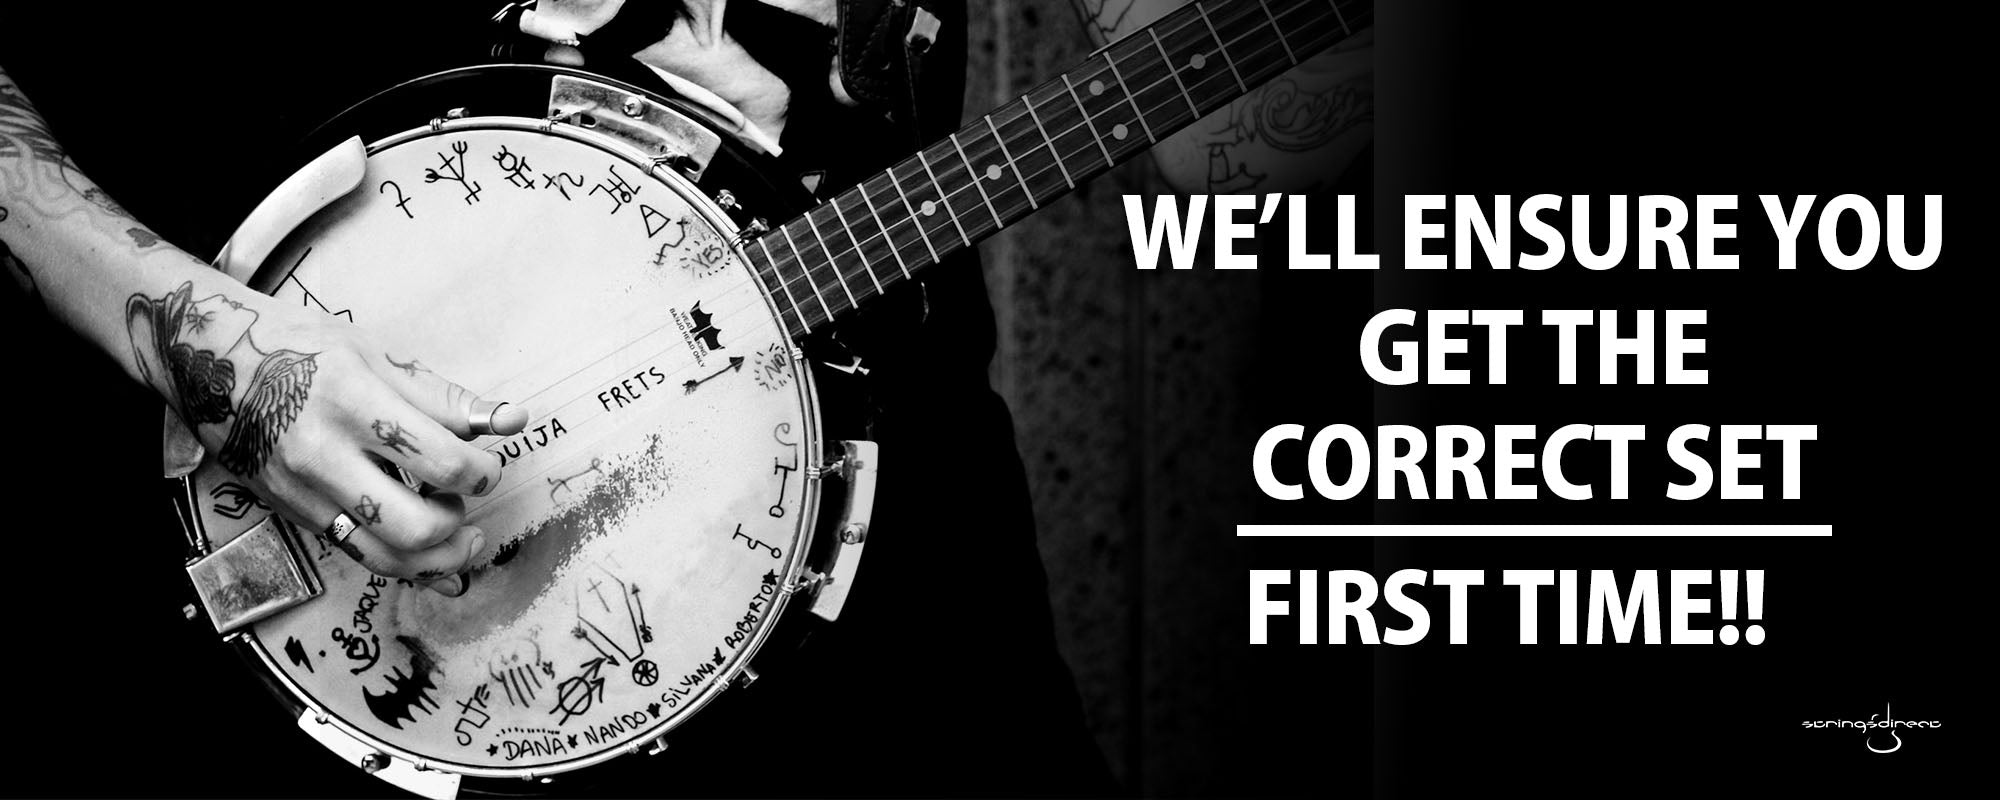 Banjo String Guide Header - We'll ensure you get the correct set first time!